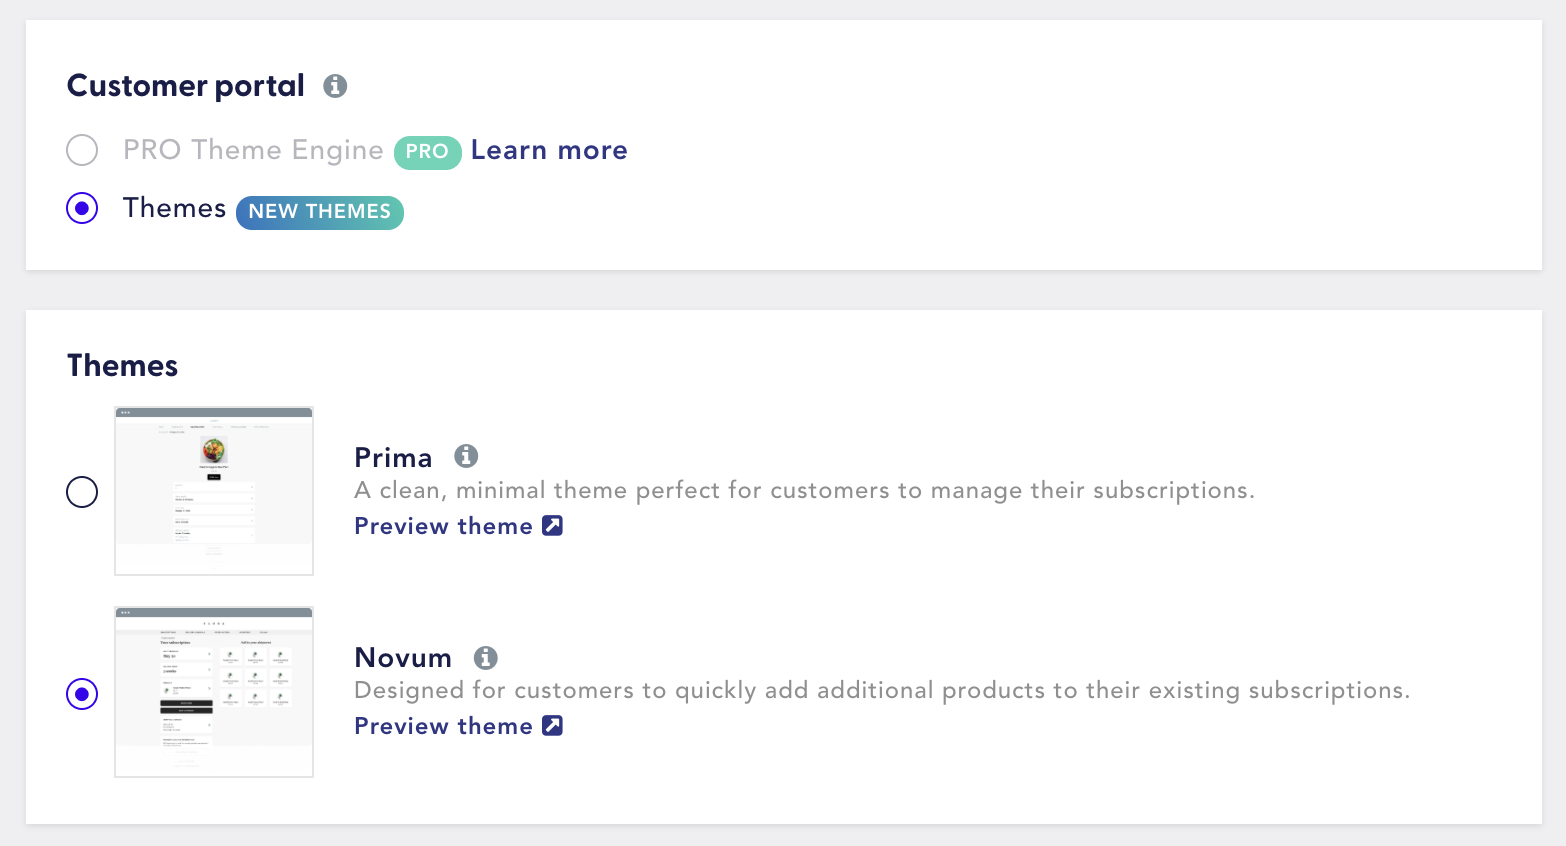 Select Novum in the customer portal settings